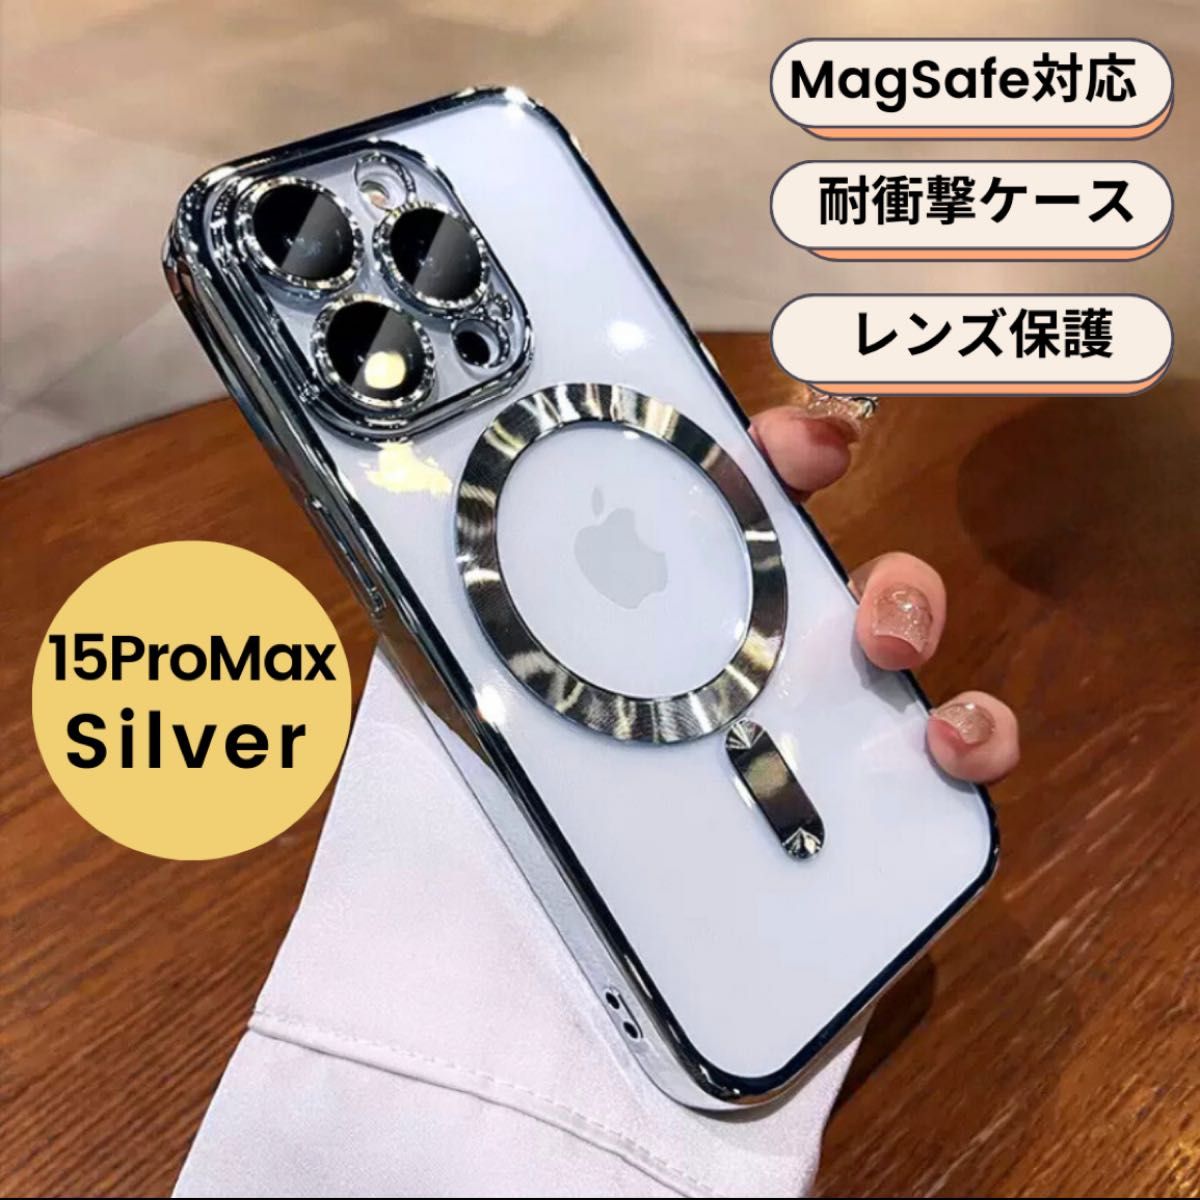 iPhoneケース  15Promax magsafe  韓国  シルバー iPhone Pro 耐衝撃  MagSafe Max